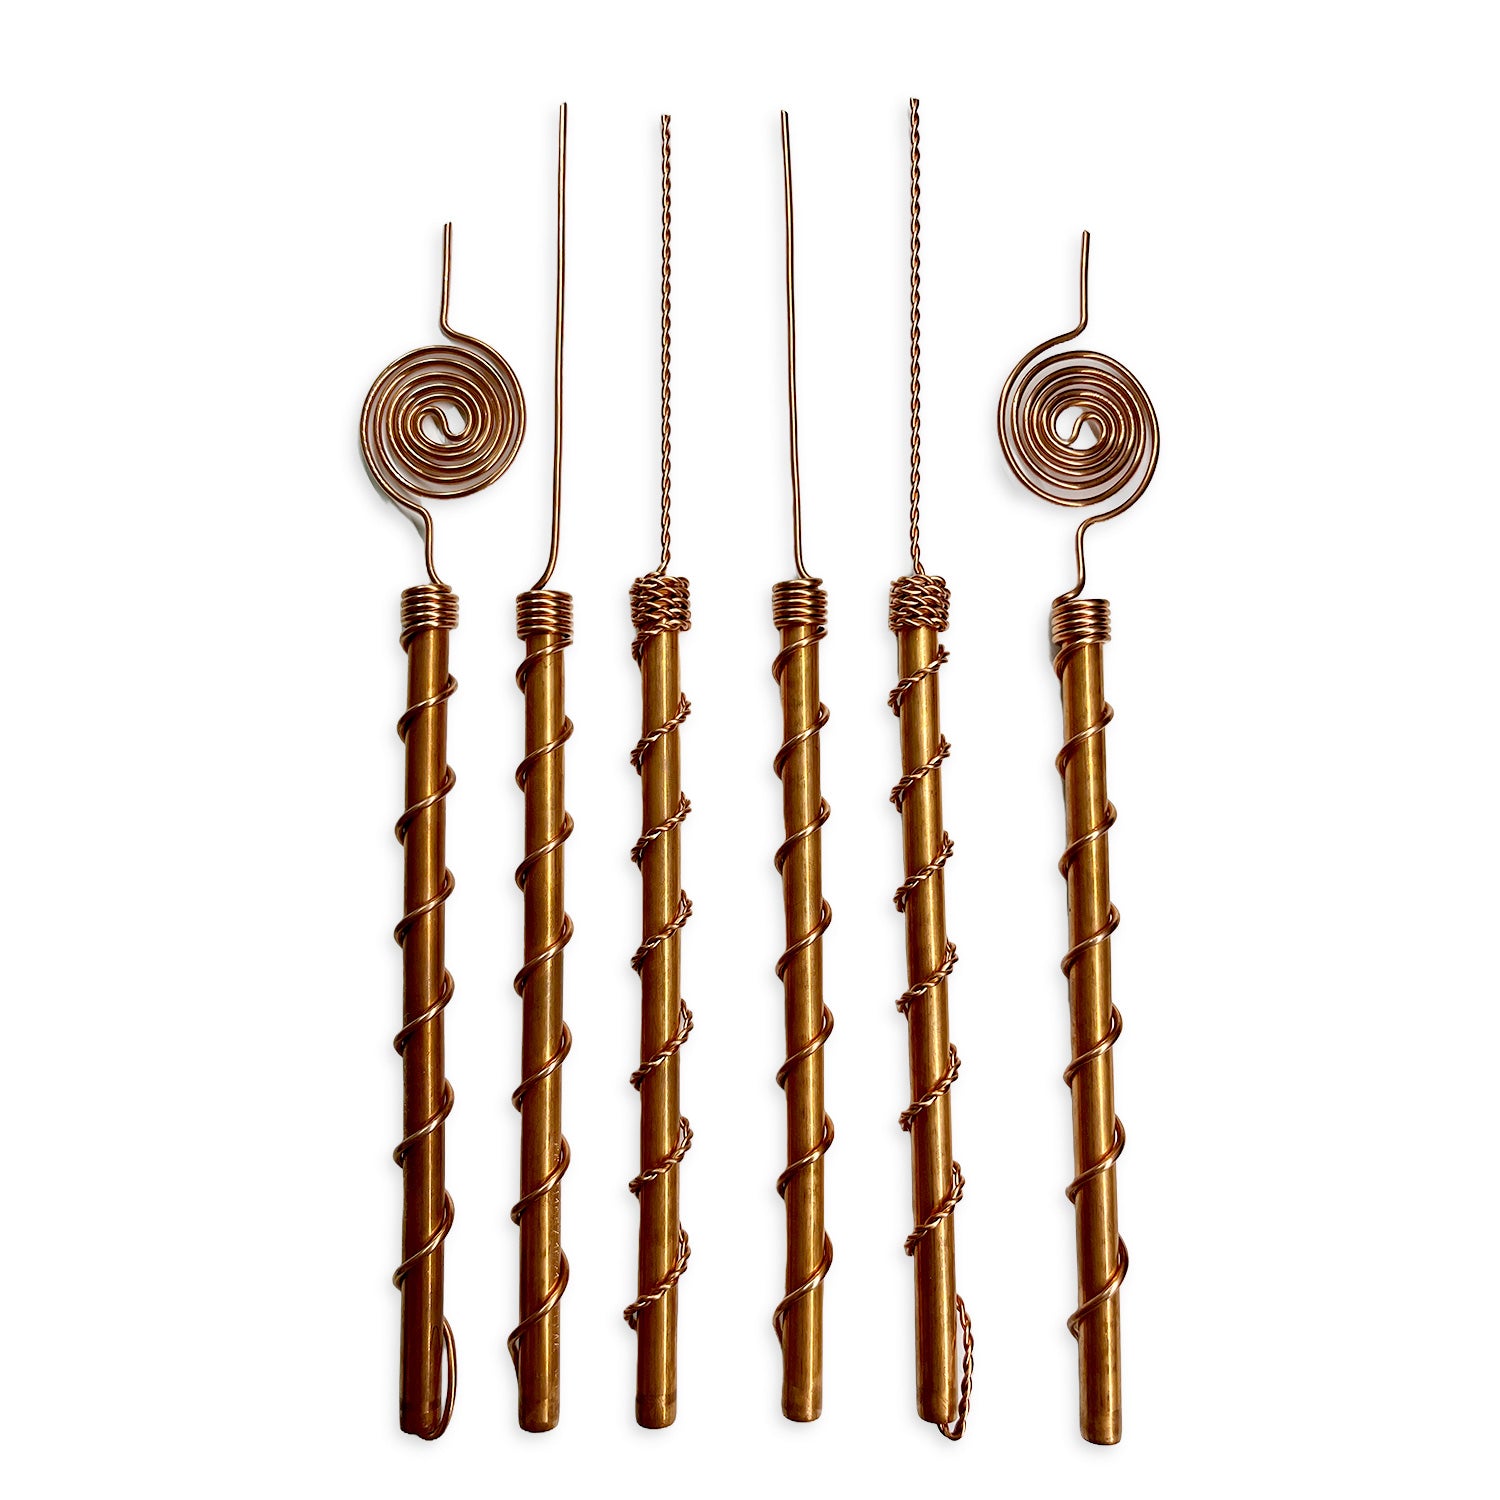 Electroculture Copper Spiral Antenna (12 Tight Coil) Garden Tool Decoration